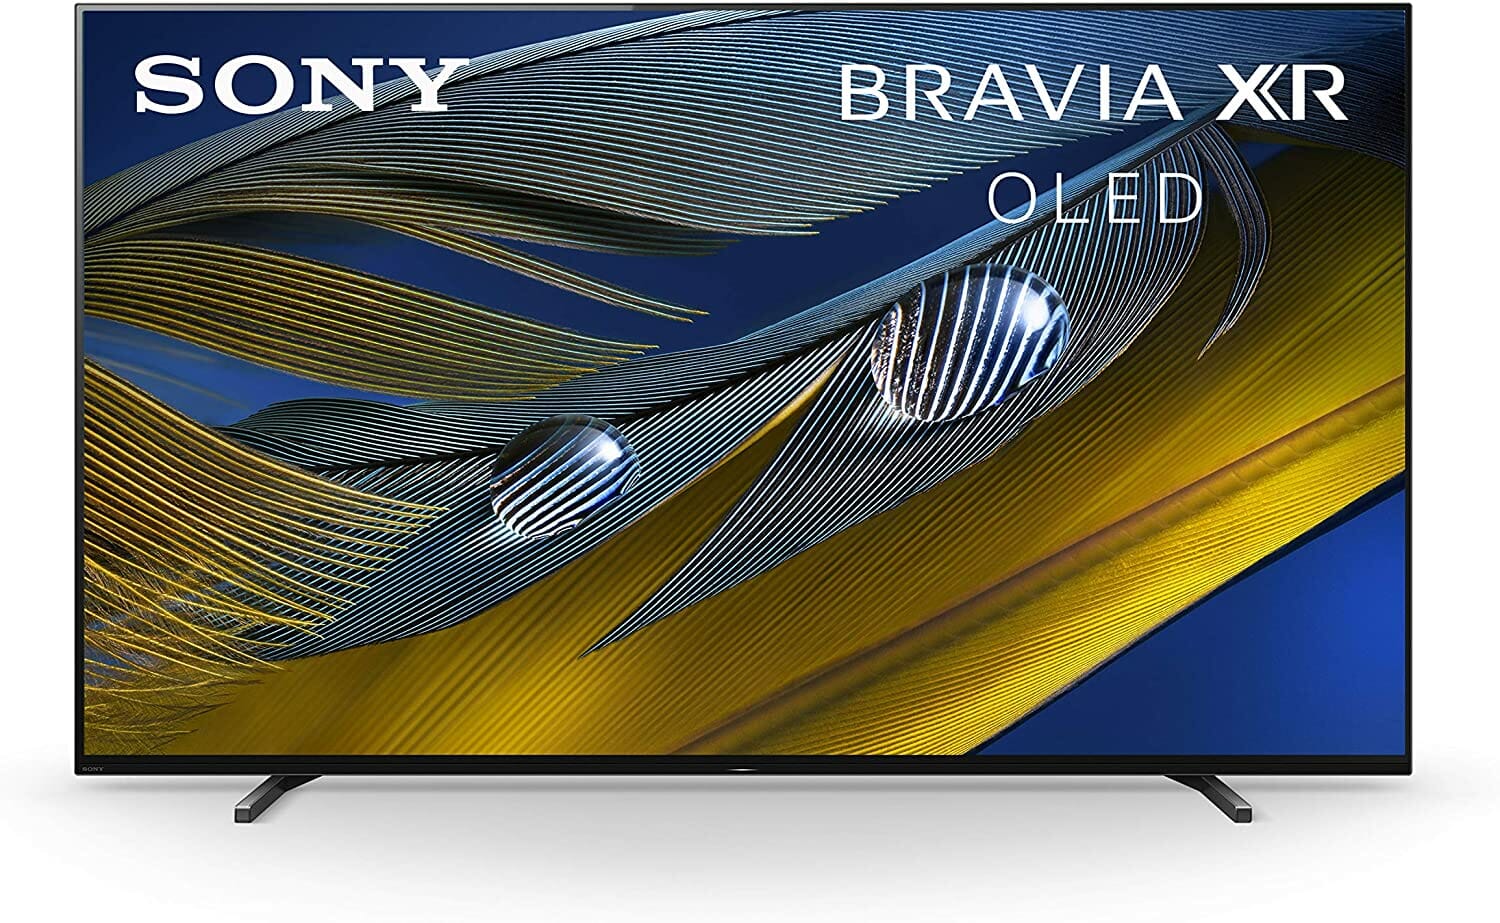  Sony A80J 65 Inch TV